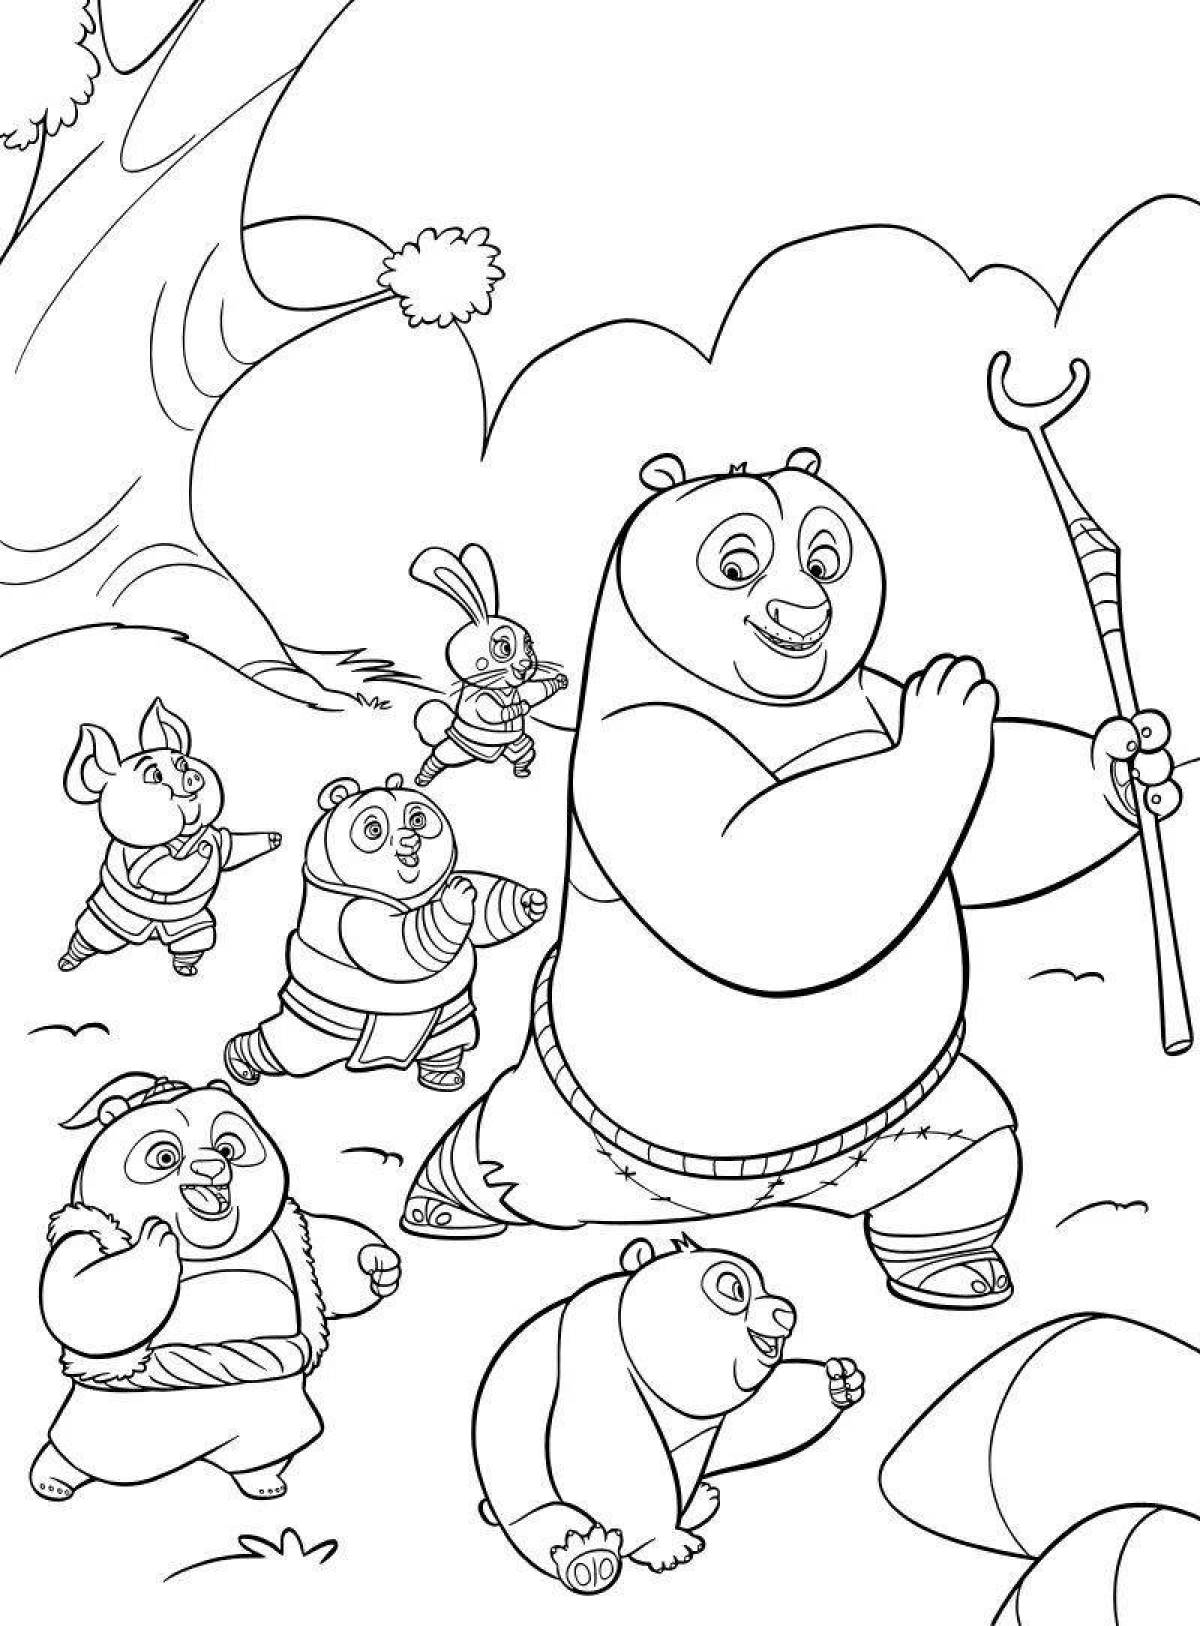 Раскраска кунг фу панда. Раскраска кунг фу Панда 3. Раскраска кунфу Панда 3. Кунг фу Панда раскраска для детей.